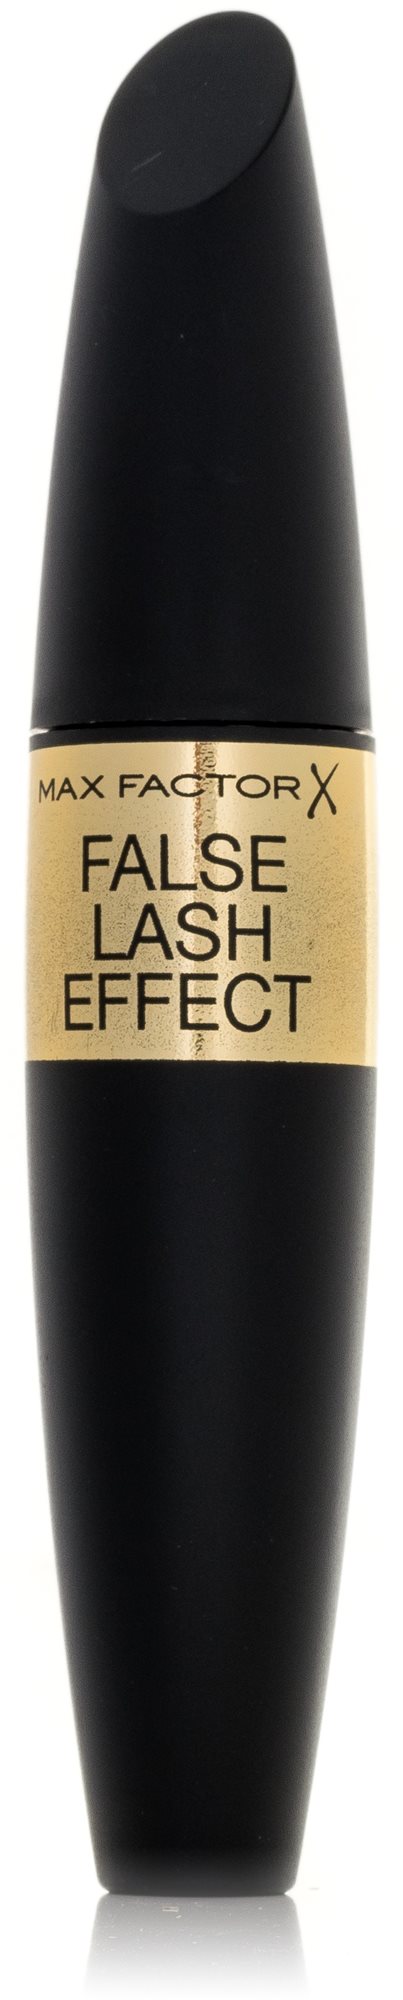 Szempillaspirál MAX FACTOR False Lash Effect Mascara 02 Black/Brown 13 ml